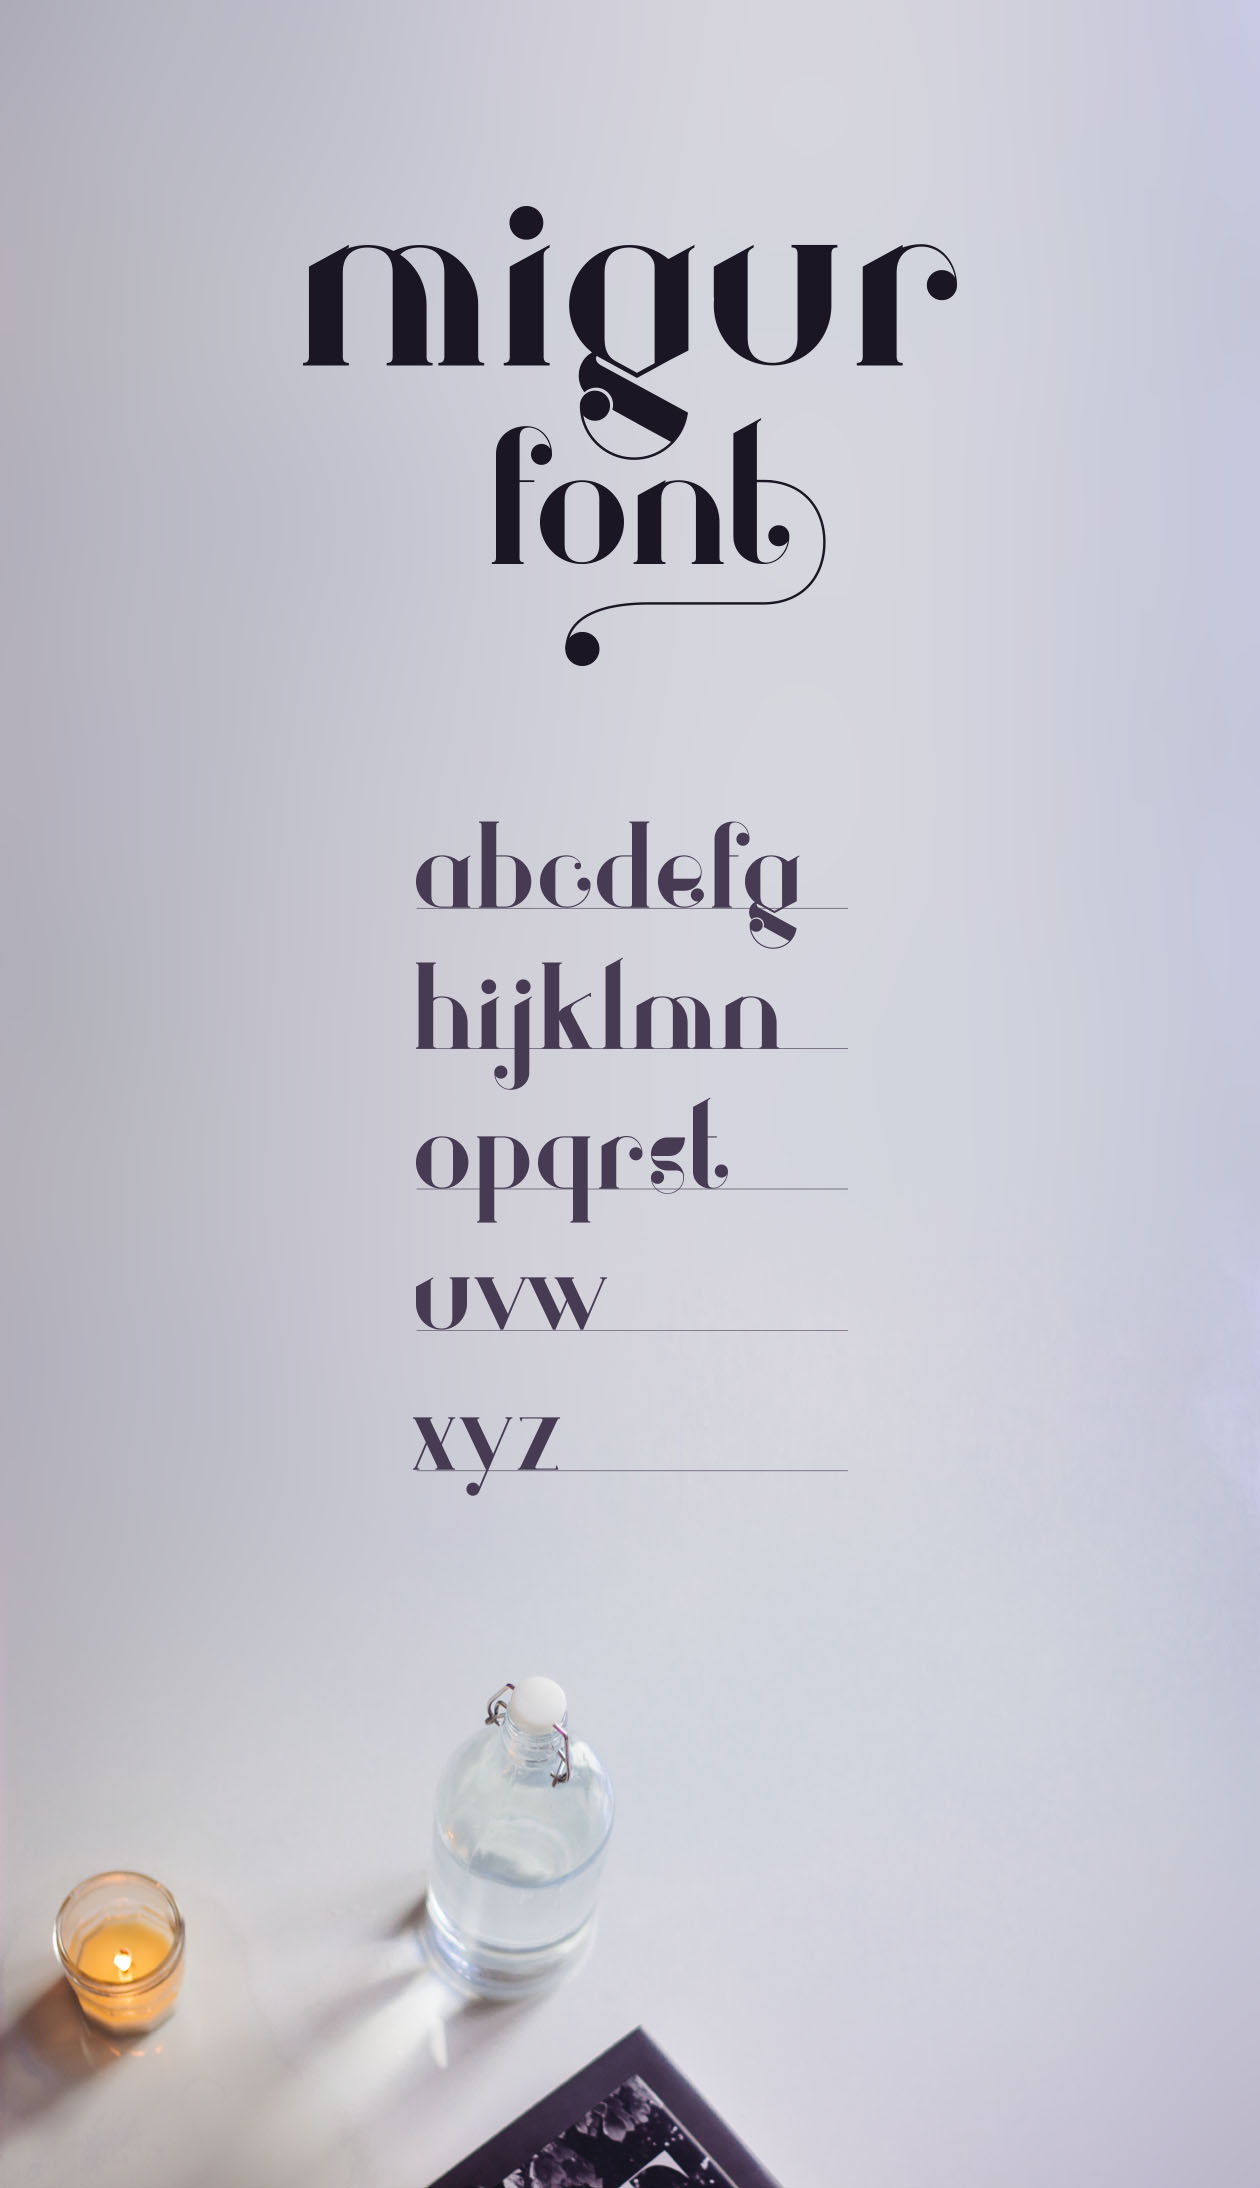 Behance网站推荐最佳英文排版印刷字体亿图网易图库精选之一 Migur Serif Font插图(1)